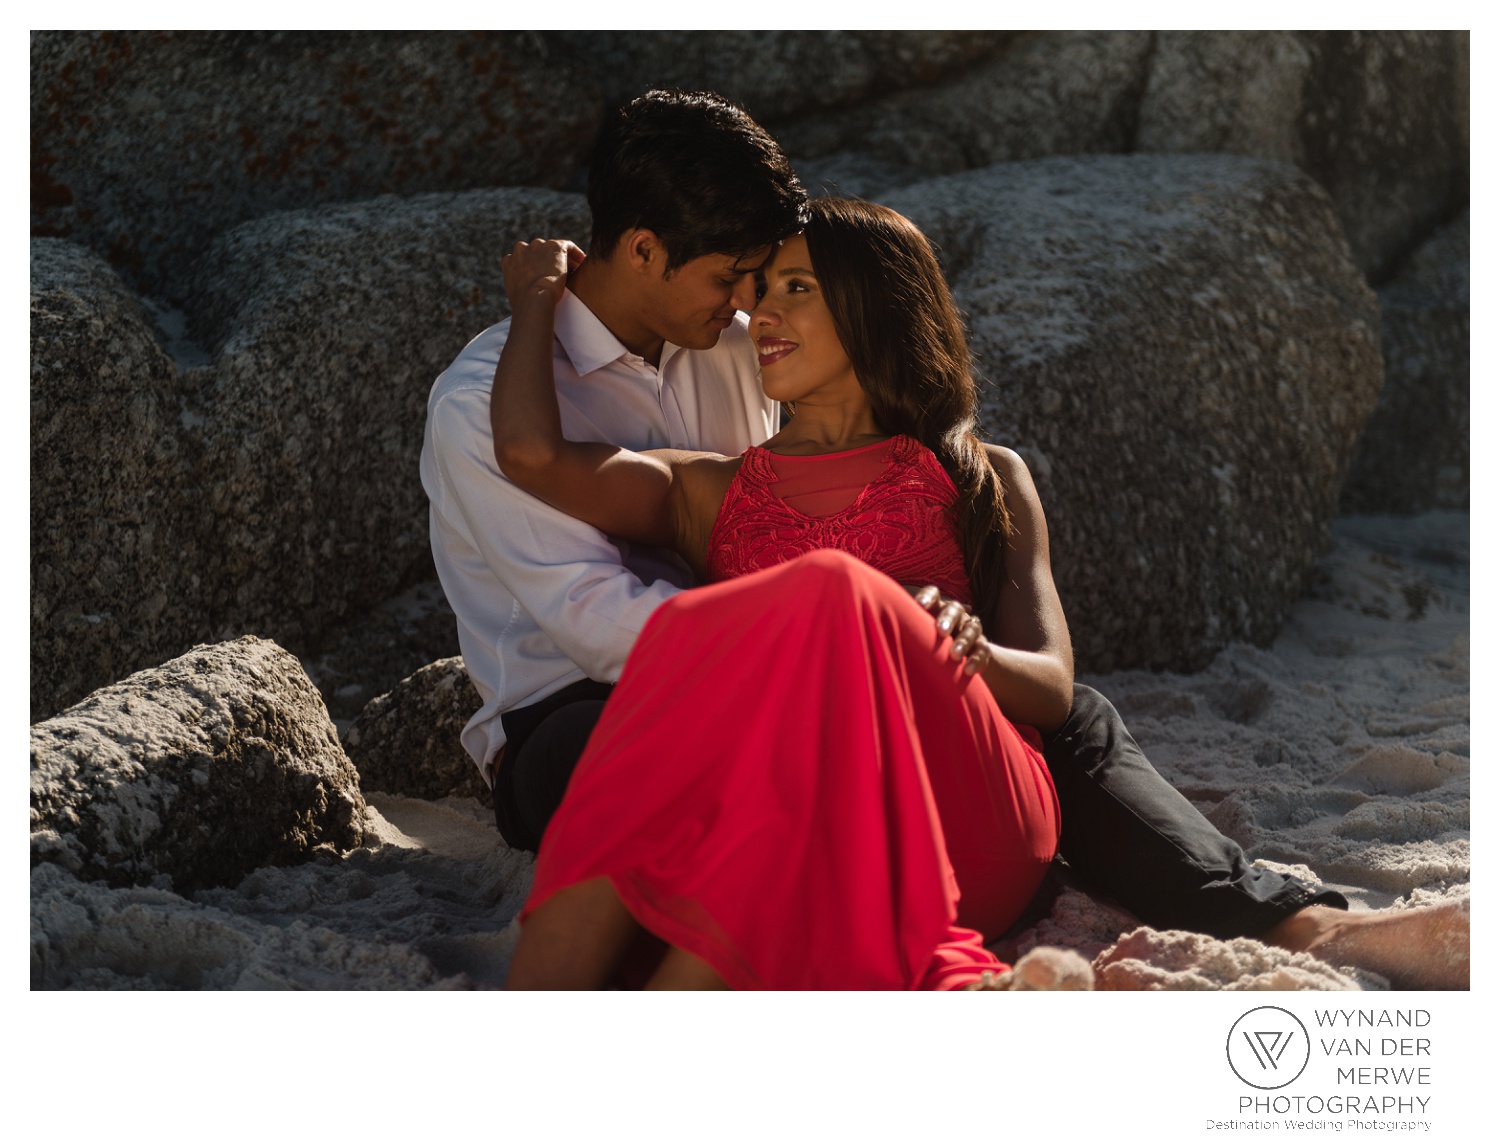 WvdM_engagementshoot_engaged_couple_prewedding_llandudno_cliftonbeach_beach_formal_southafrica_weddingphotographer_greernicolas-110.jpg